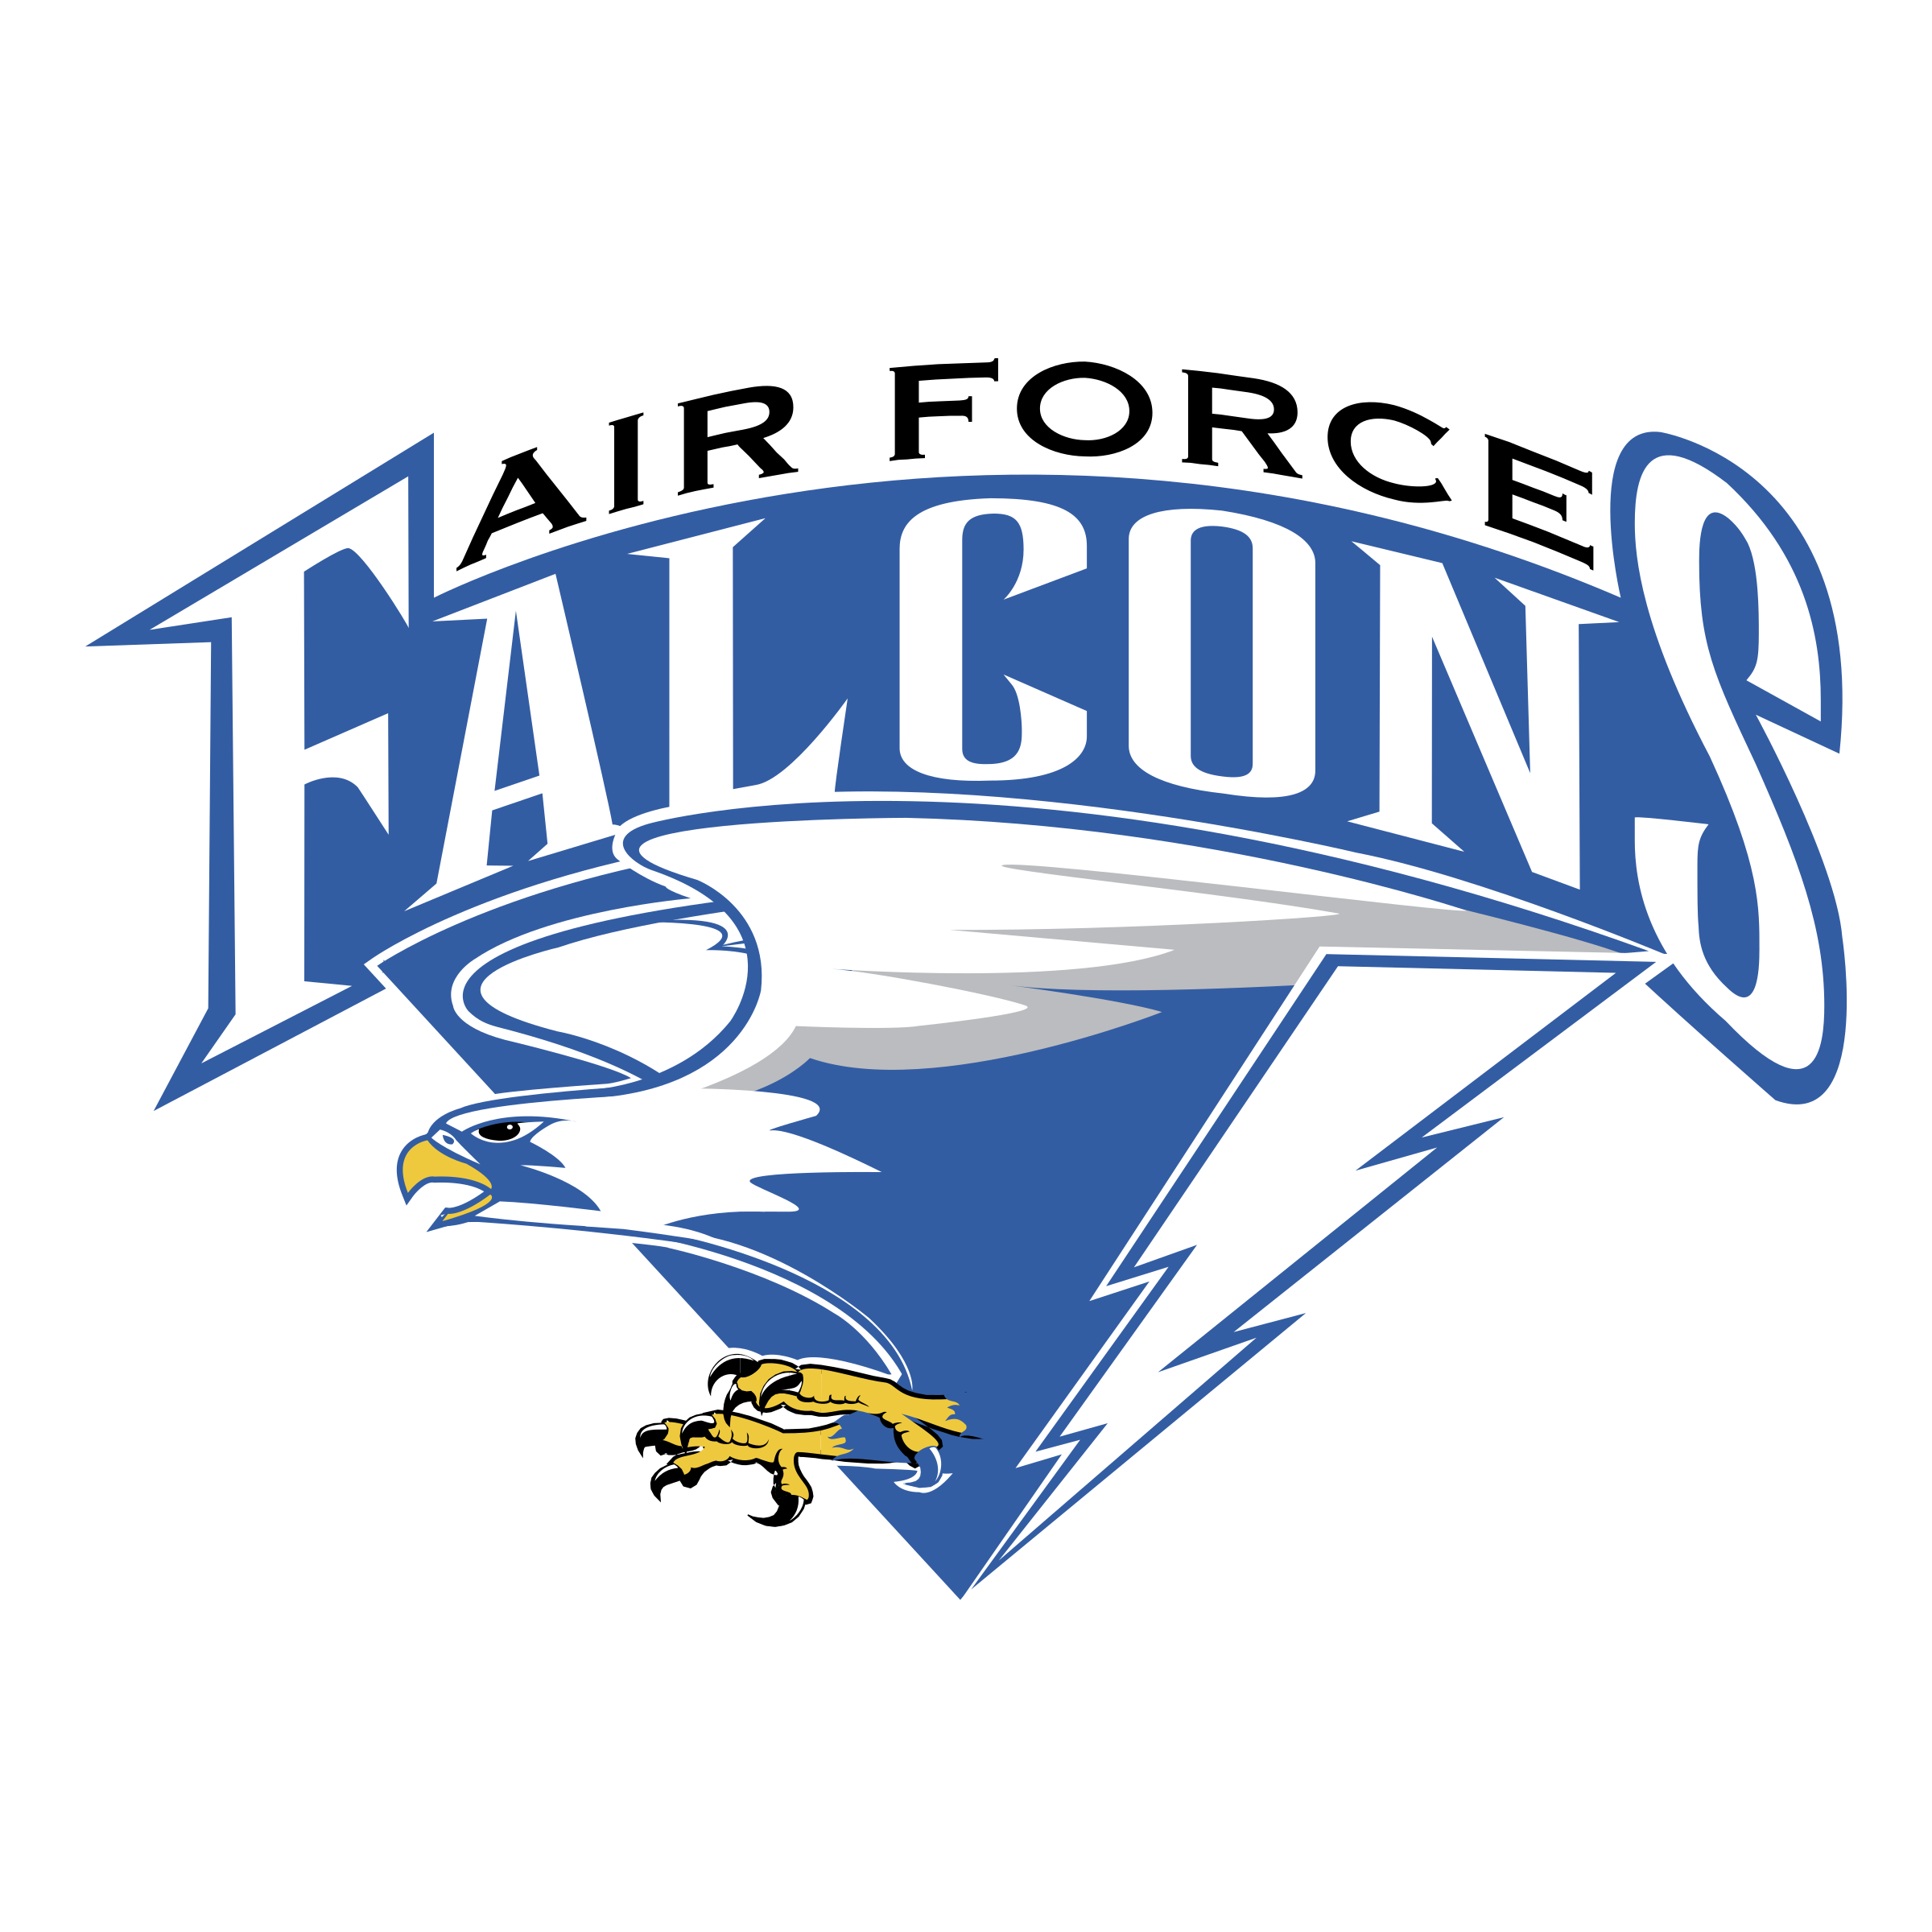 Falcon clipart svg. Air force falcons logo